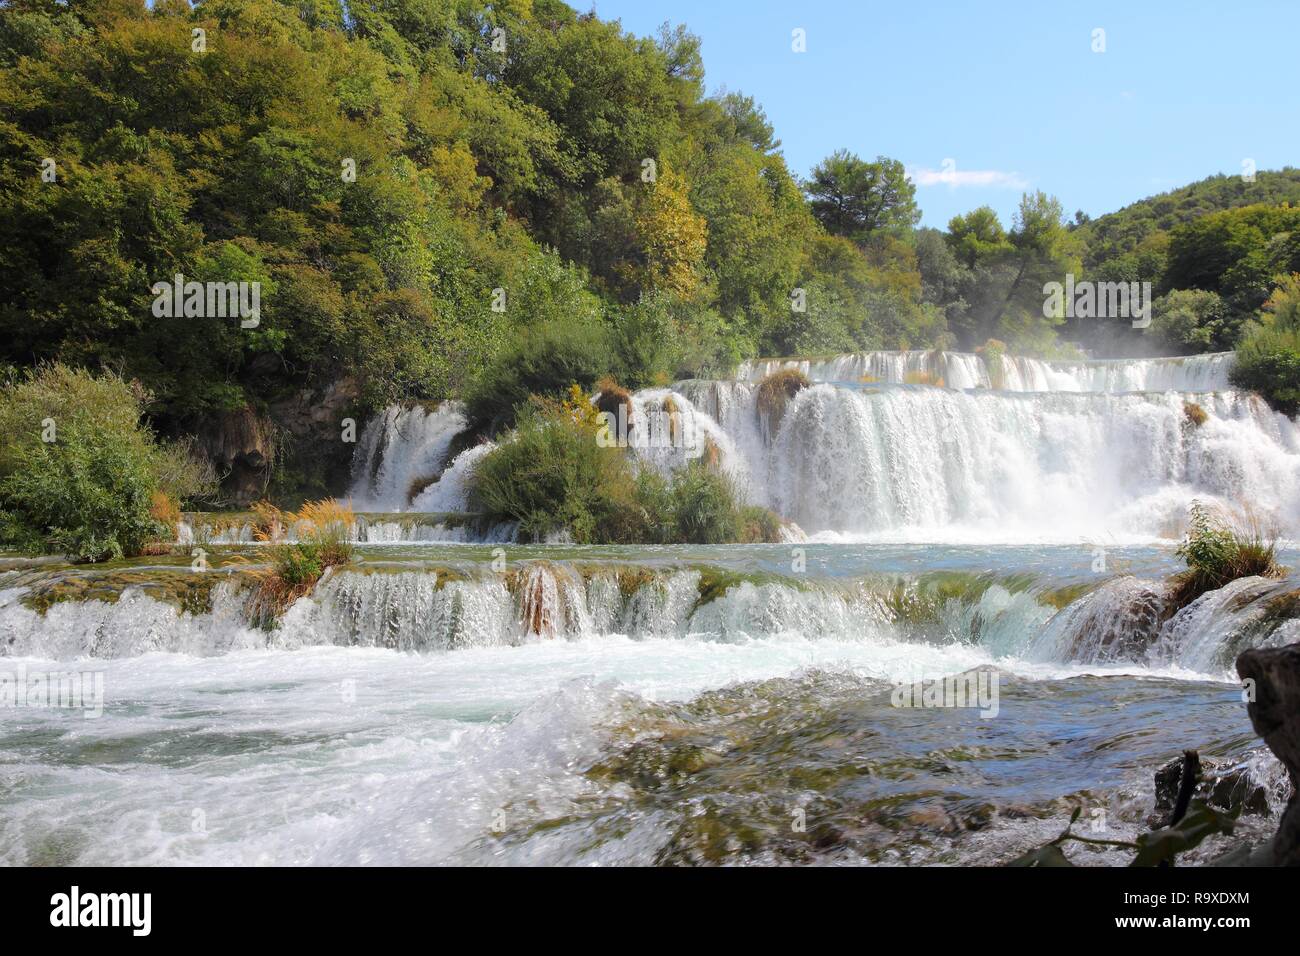 Croazia - Parco Nazionale di Krka in Dalmazia. Belle cascate. Foto Stock